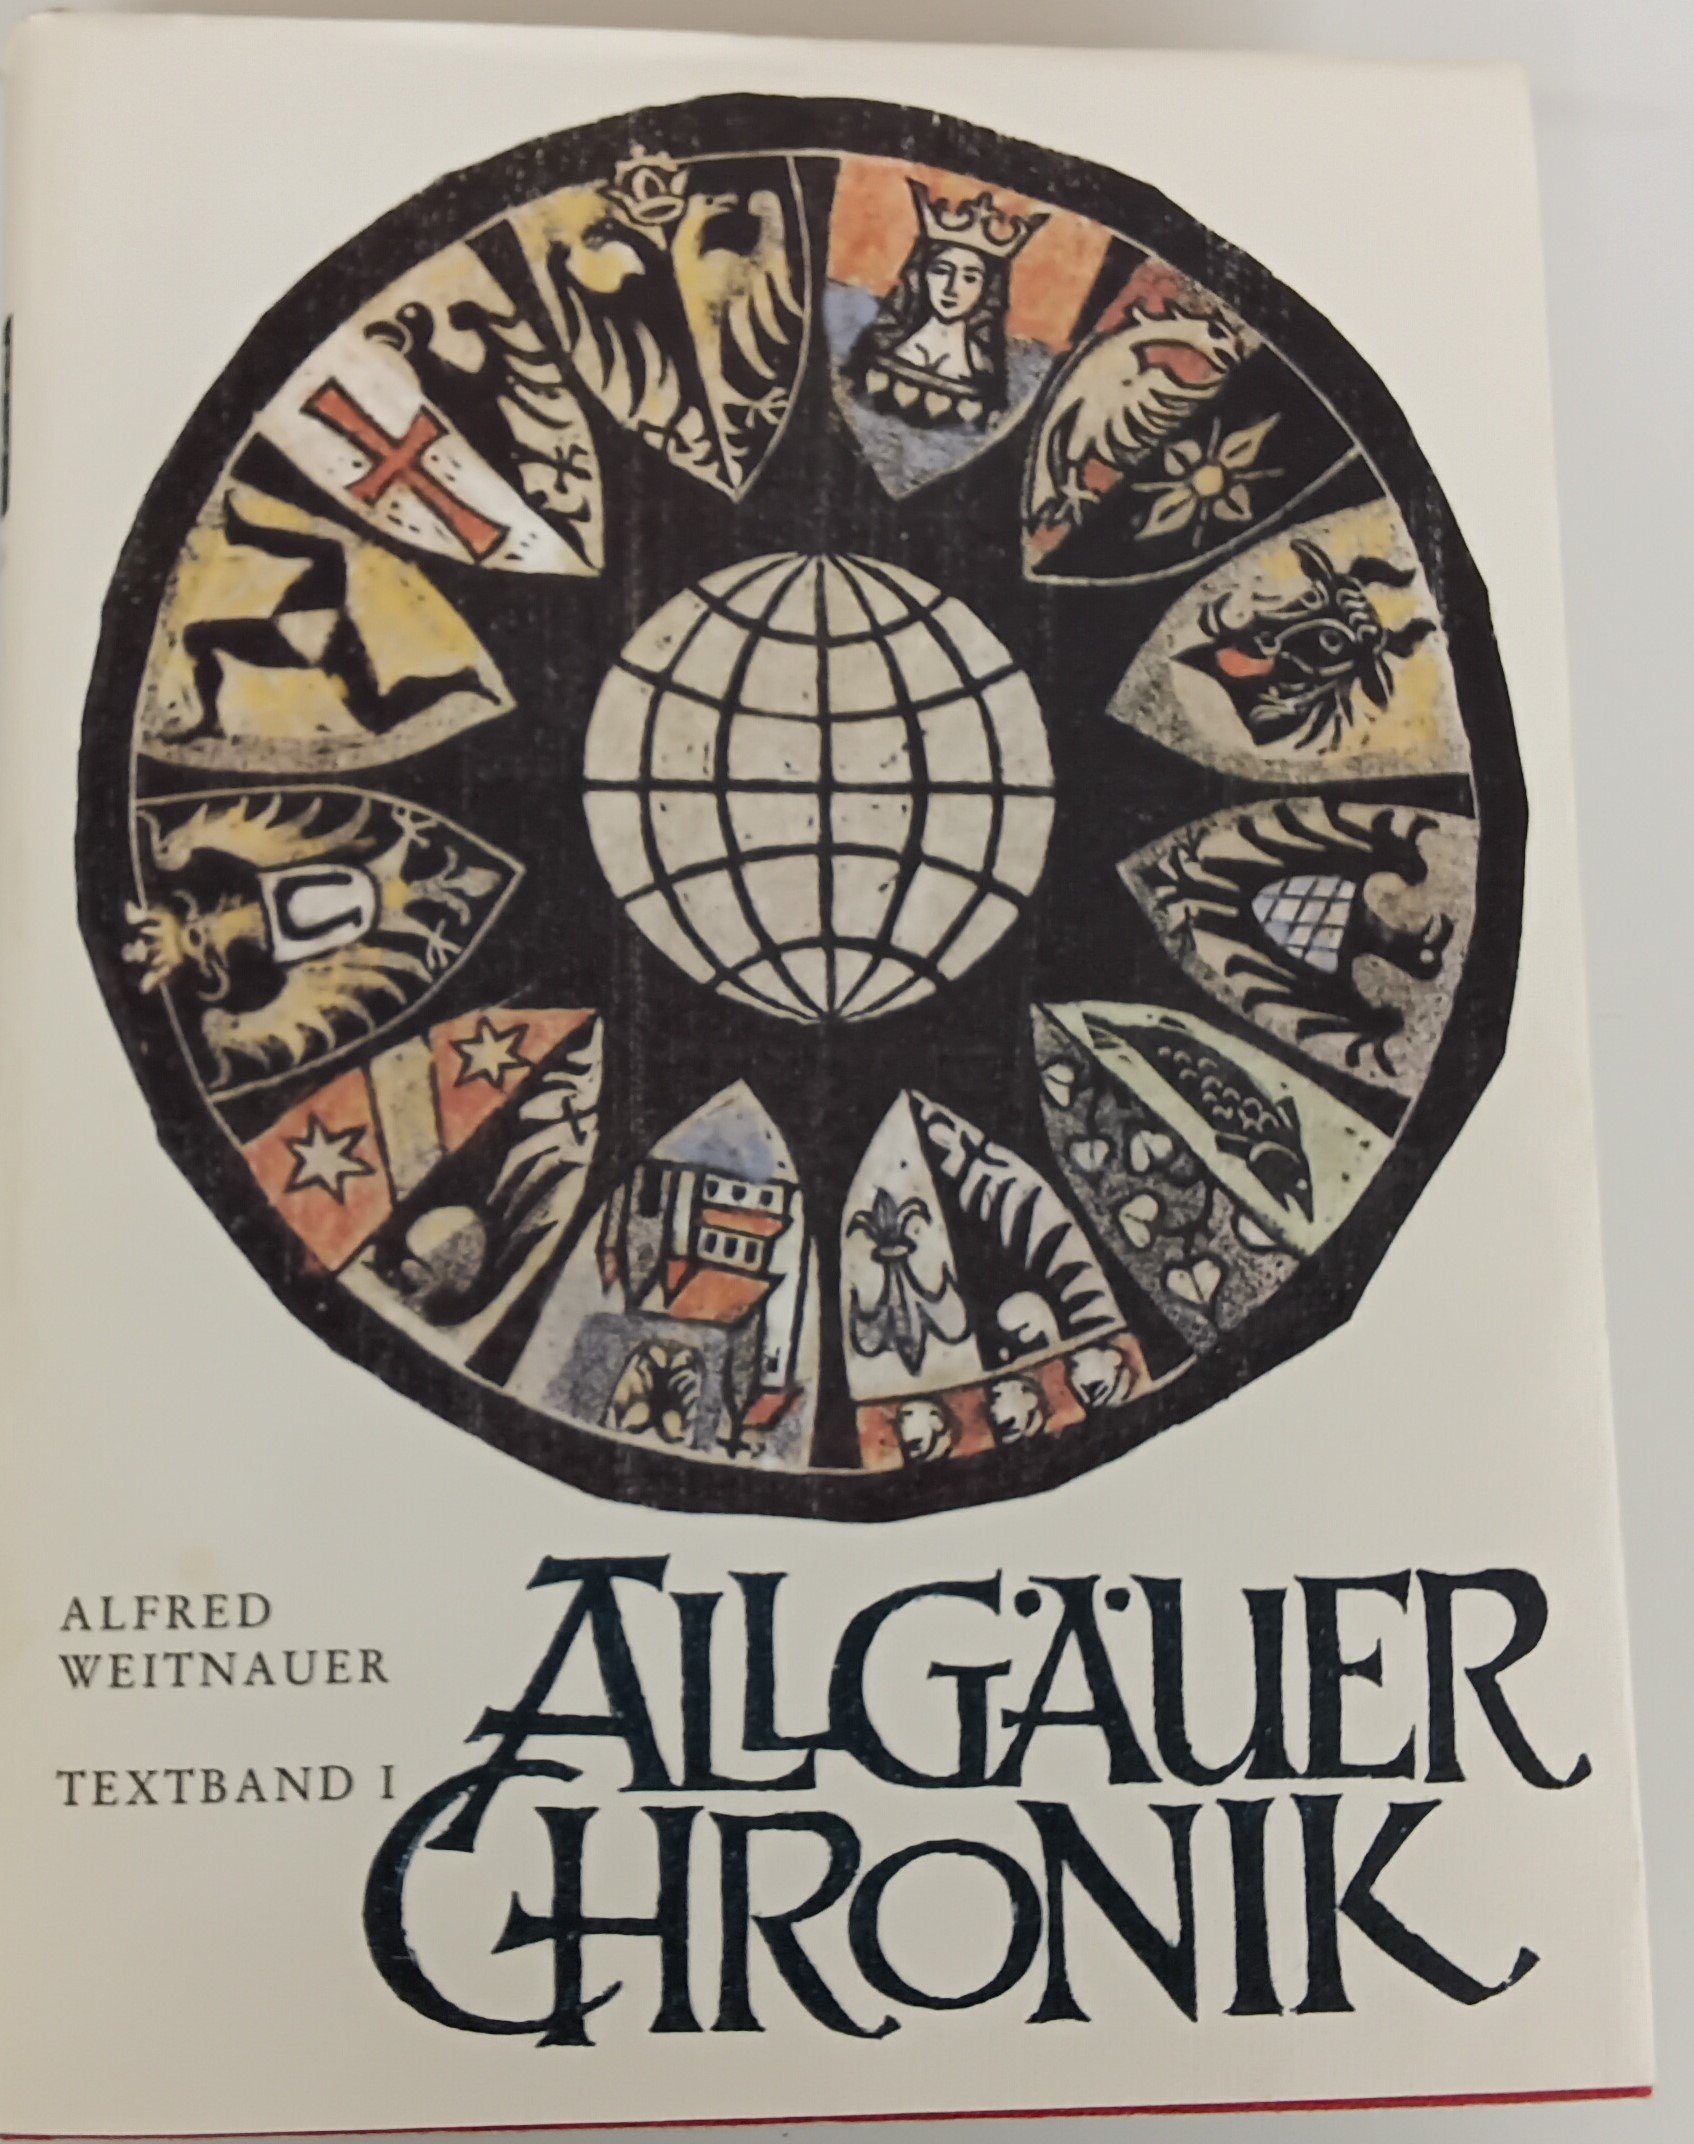 Buch: Allgäuer Chronik Textband 1 (Heimatmuseum Aichstetten CC BY-NC-SA)